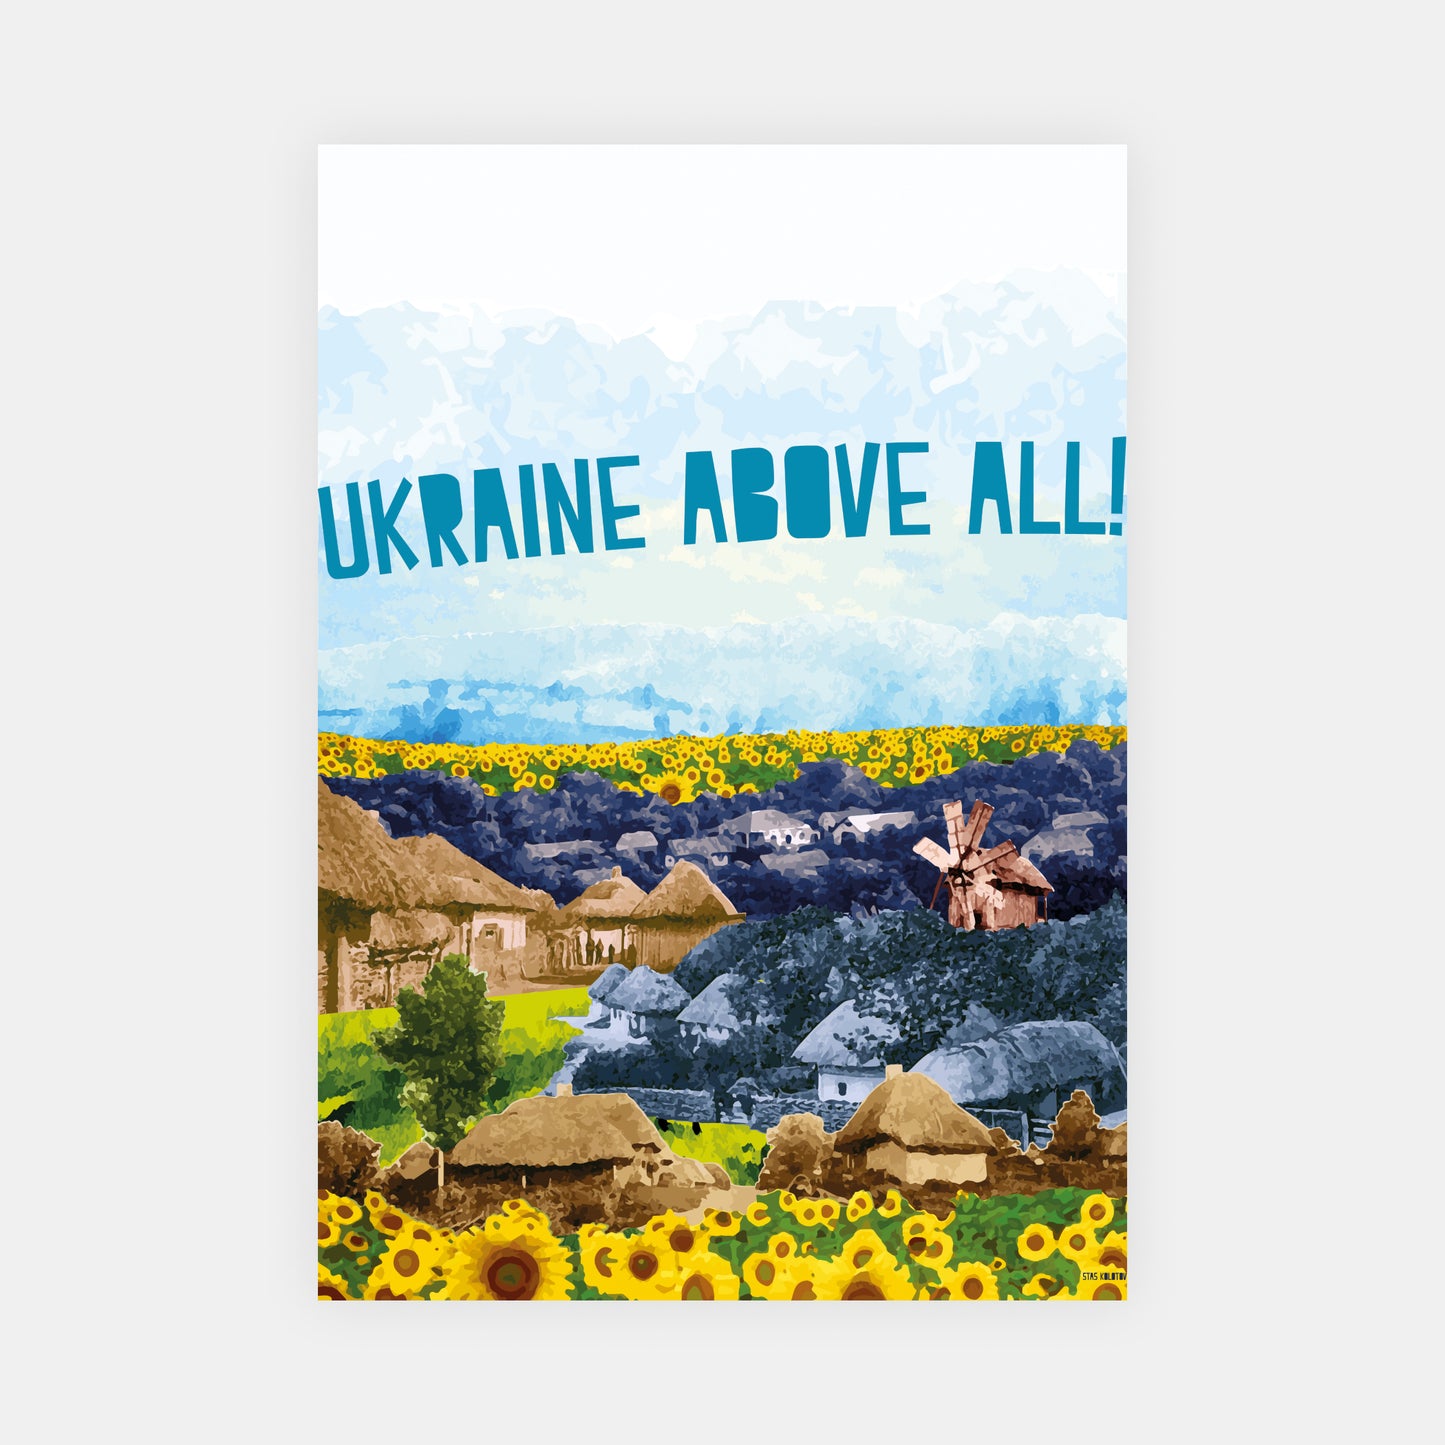 Ukraine Above All!